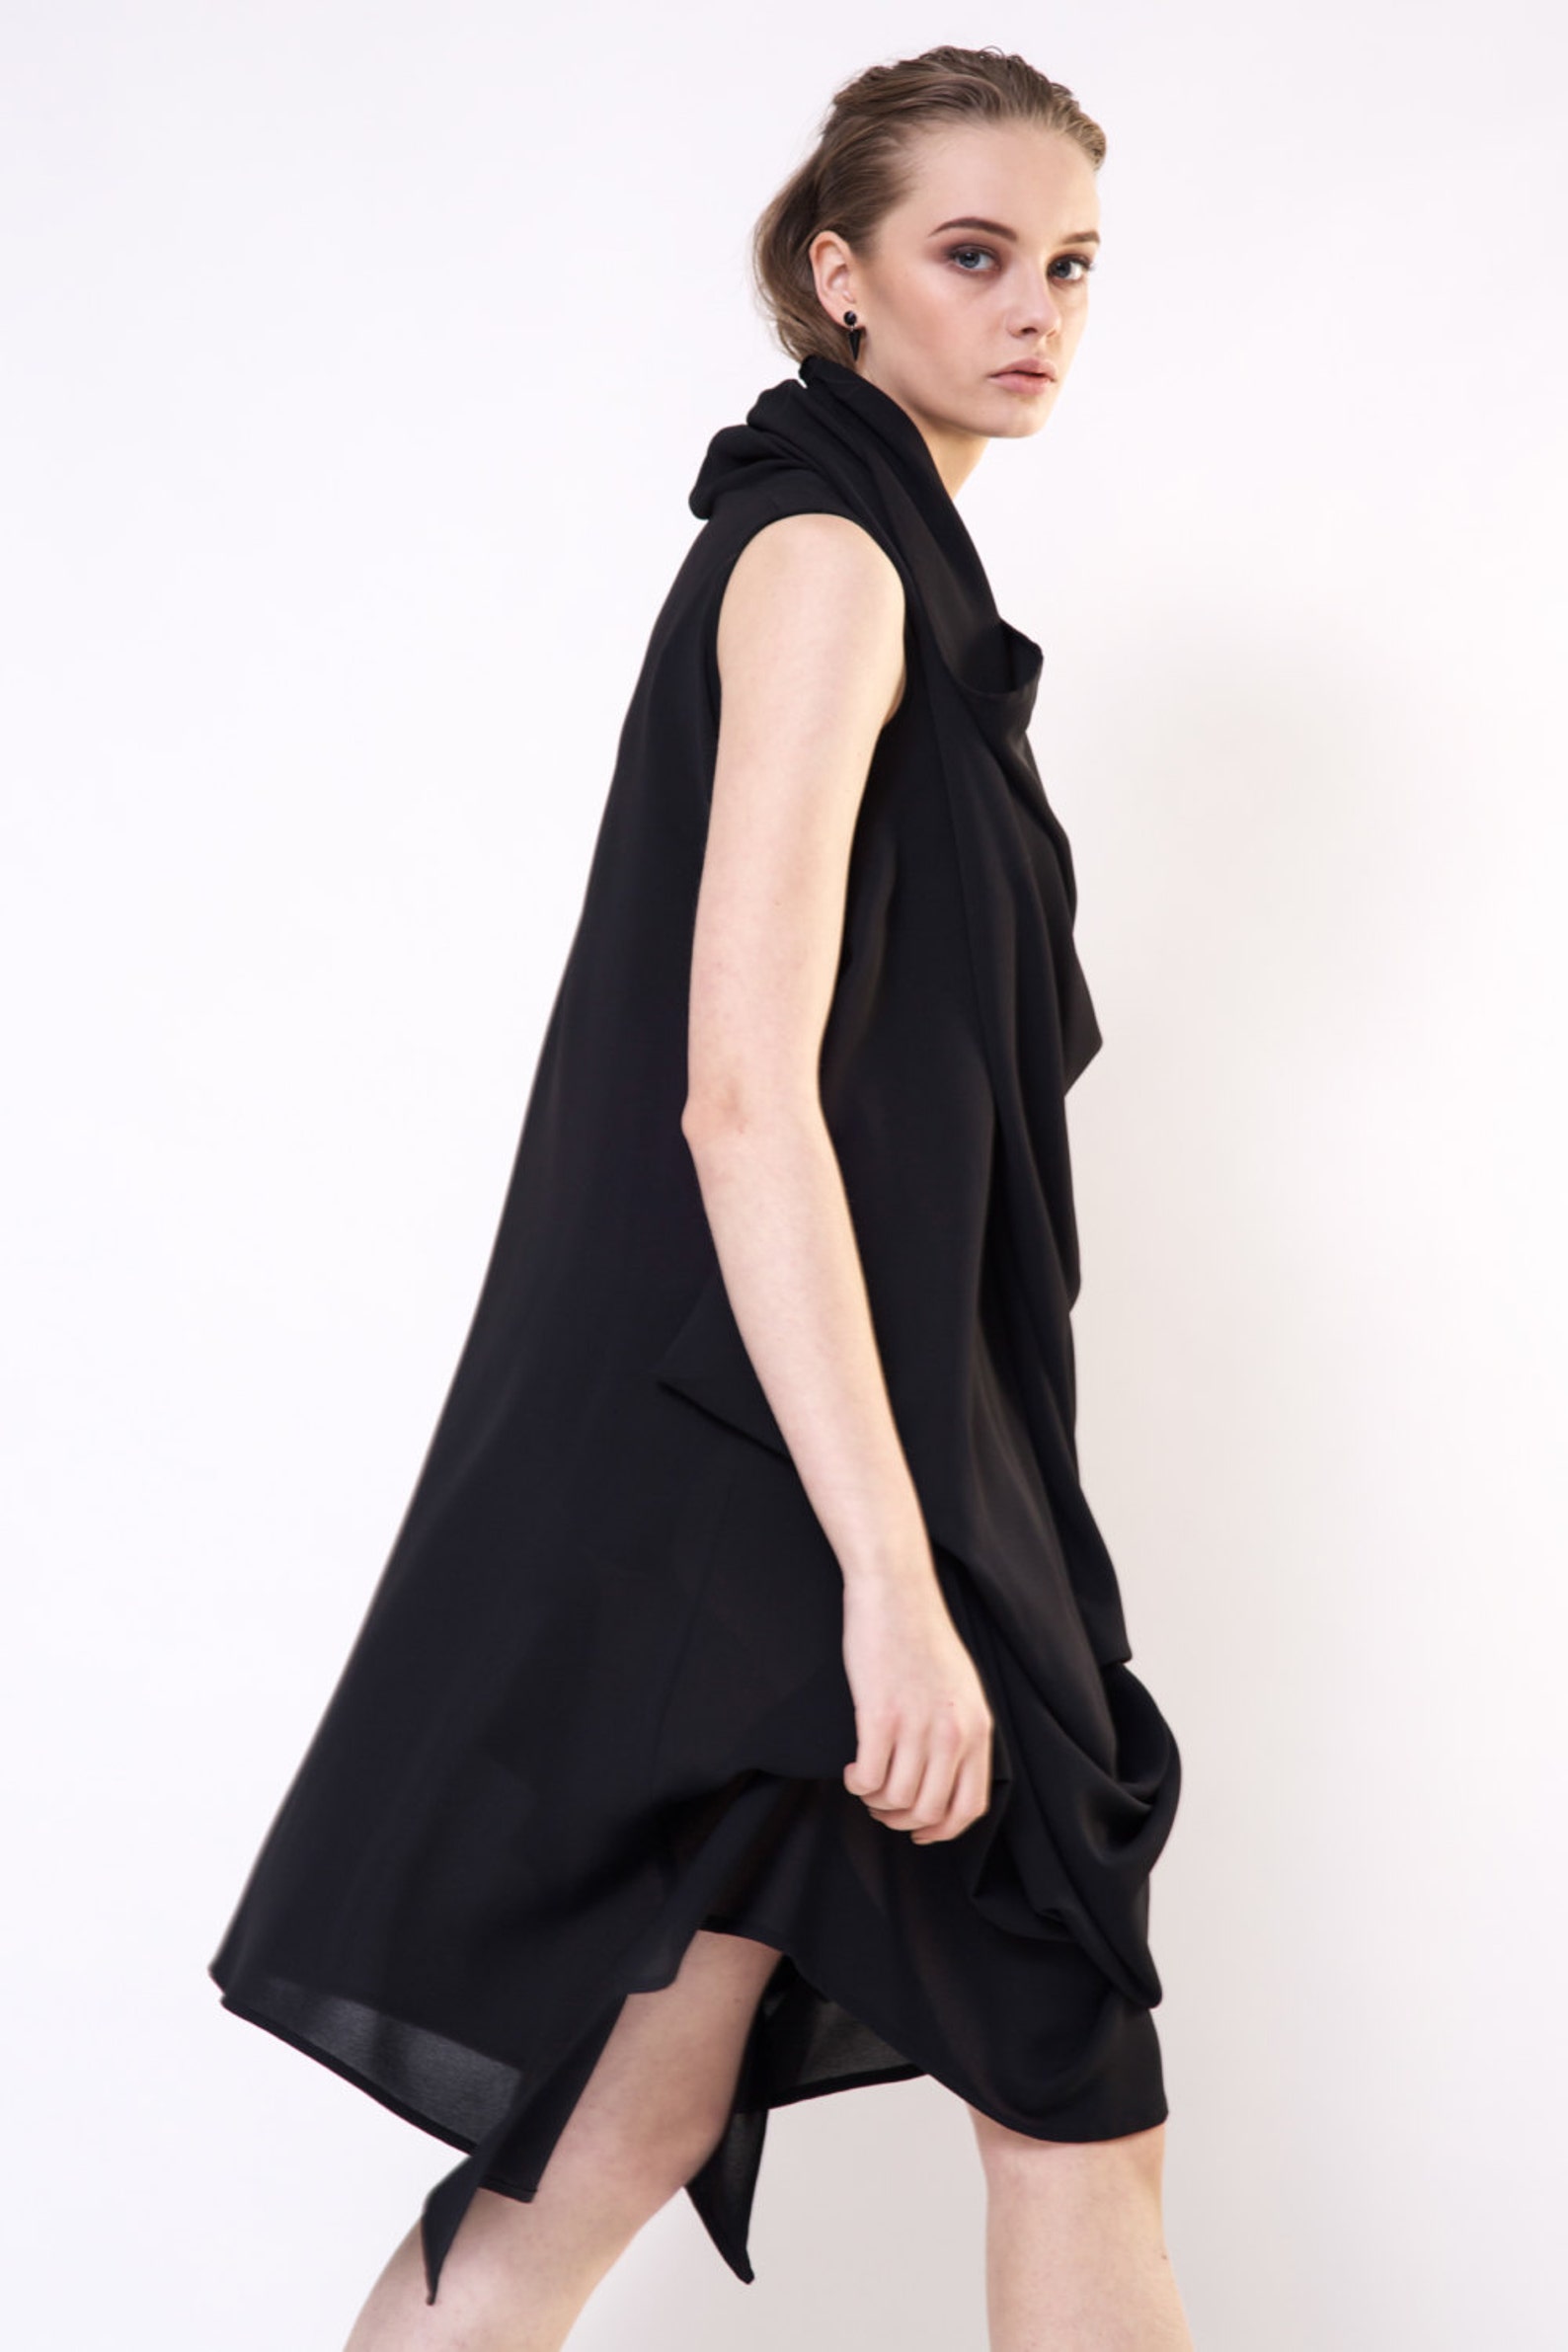 Silk Dress / Dress / Black Dress /evening Dress / Formal Dress | Etsy